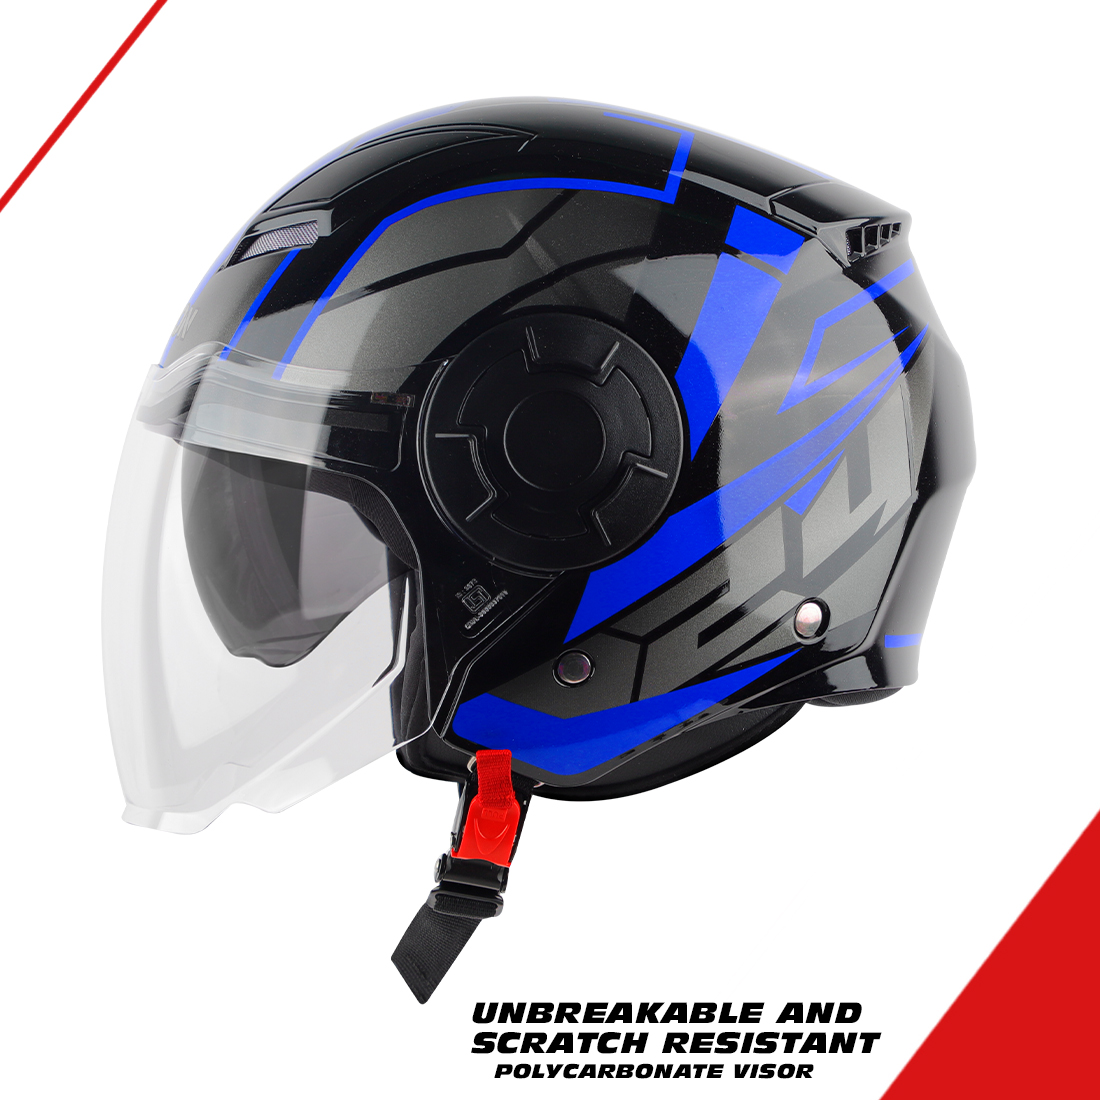 Steelbird SBH-31 Baron 24 ISI Certified Open Face Helmet For Men And Women With Inner Sun Shield(Dual Visor Mechanism) (Glossy Black Blue)